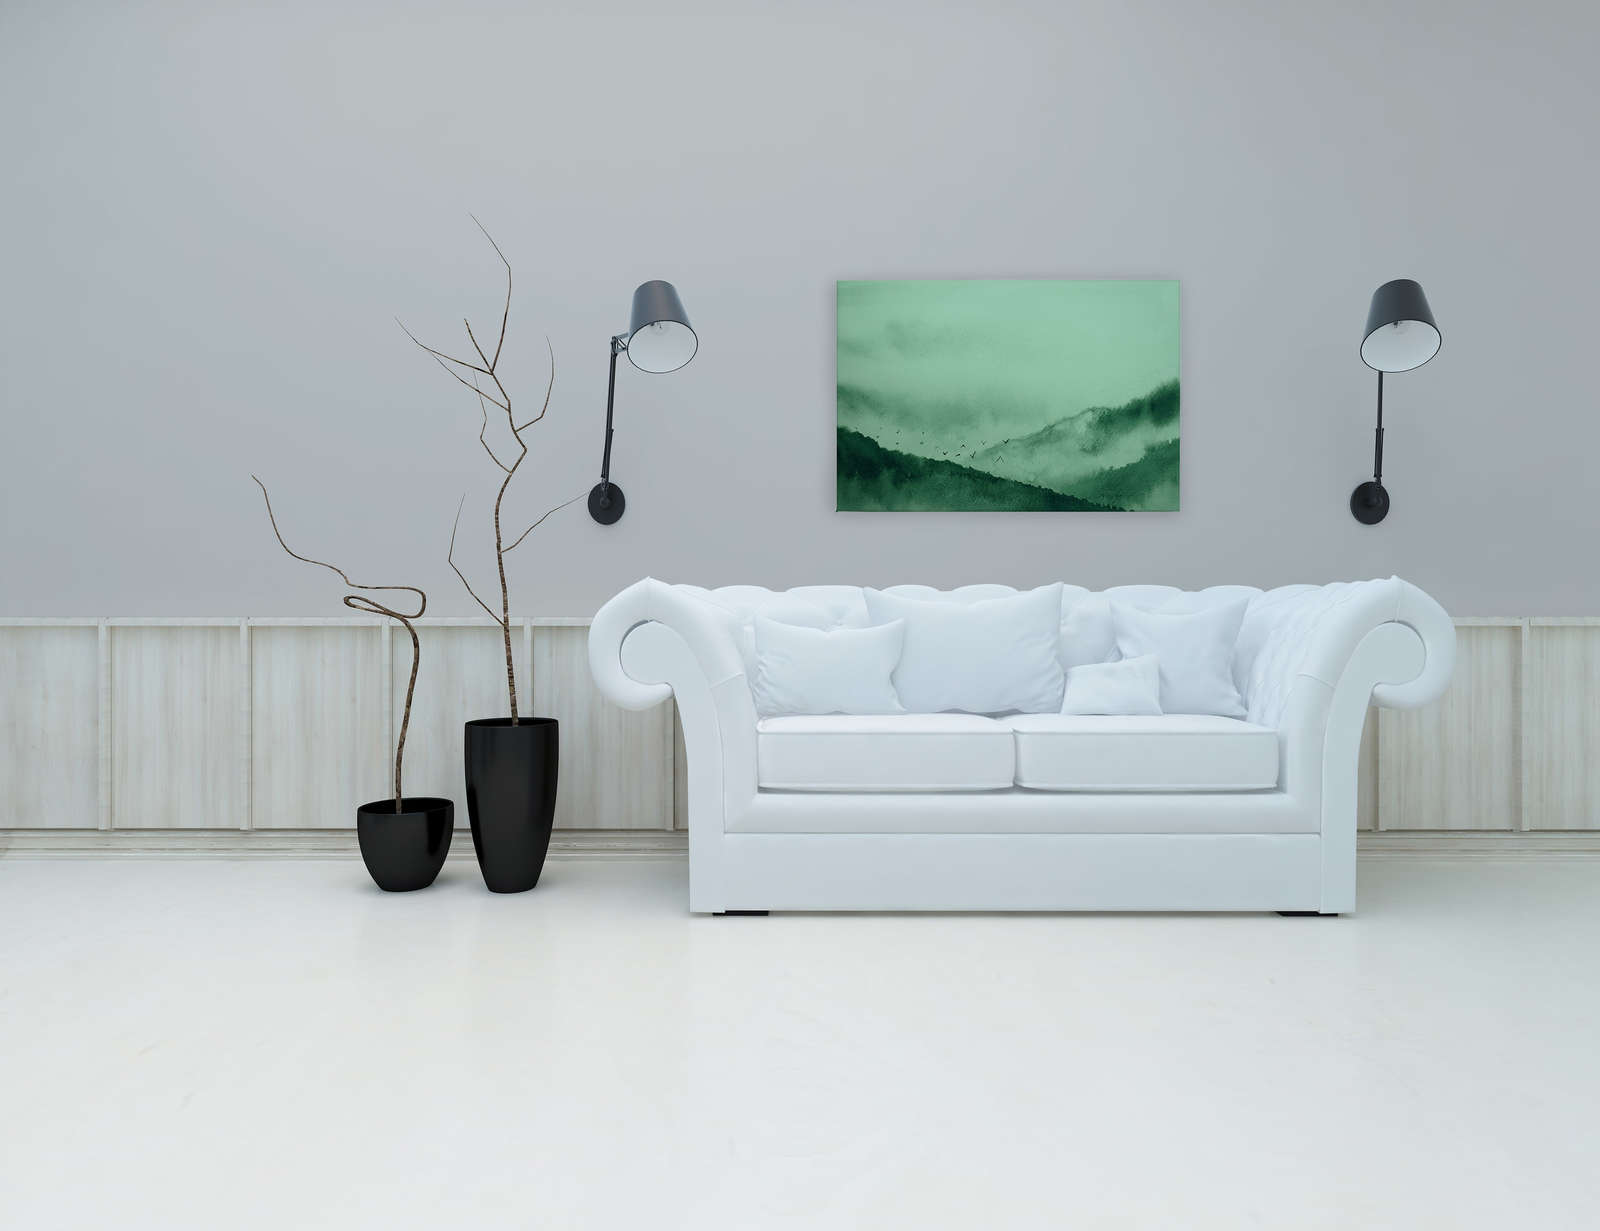             Tela con paesaggio nebbioso in stile pittura | verde, nero - 0,90 m x 0,60 m
        